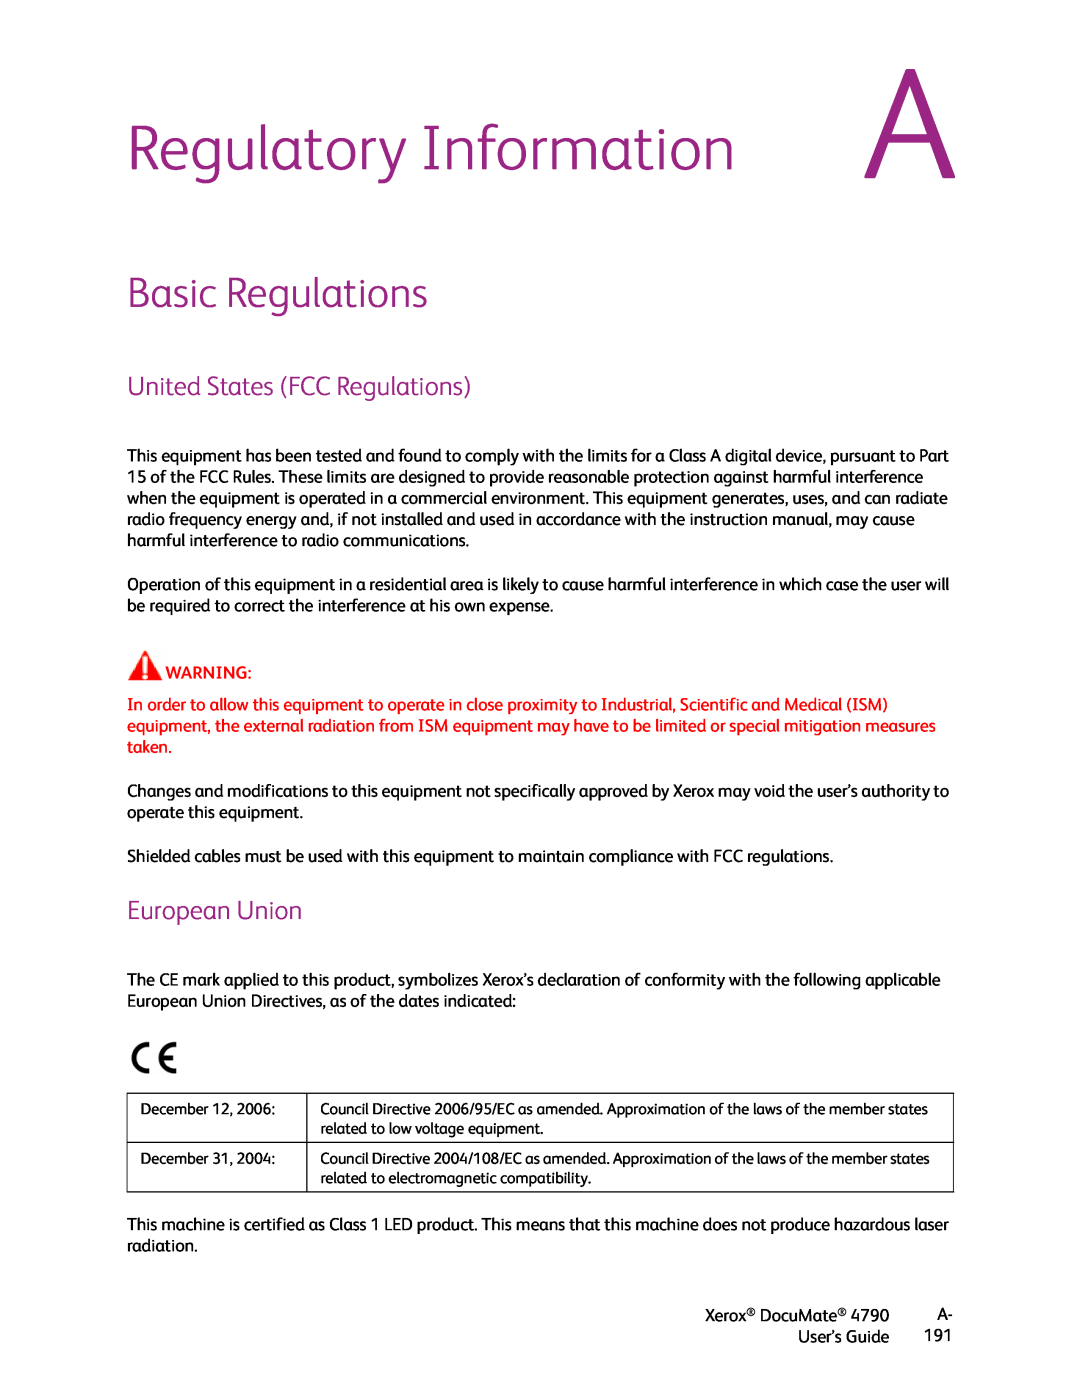 Xerox xerox documate manual Regulatory Information, Basic Regulations, United States FCC Regulations, European Union 